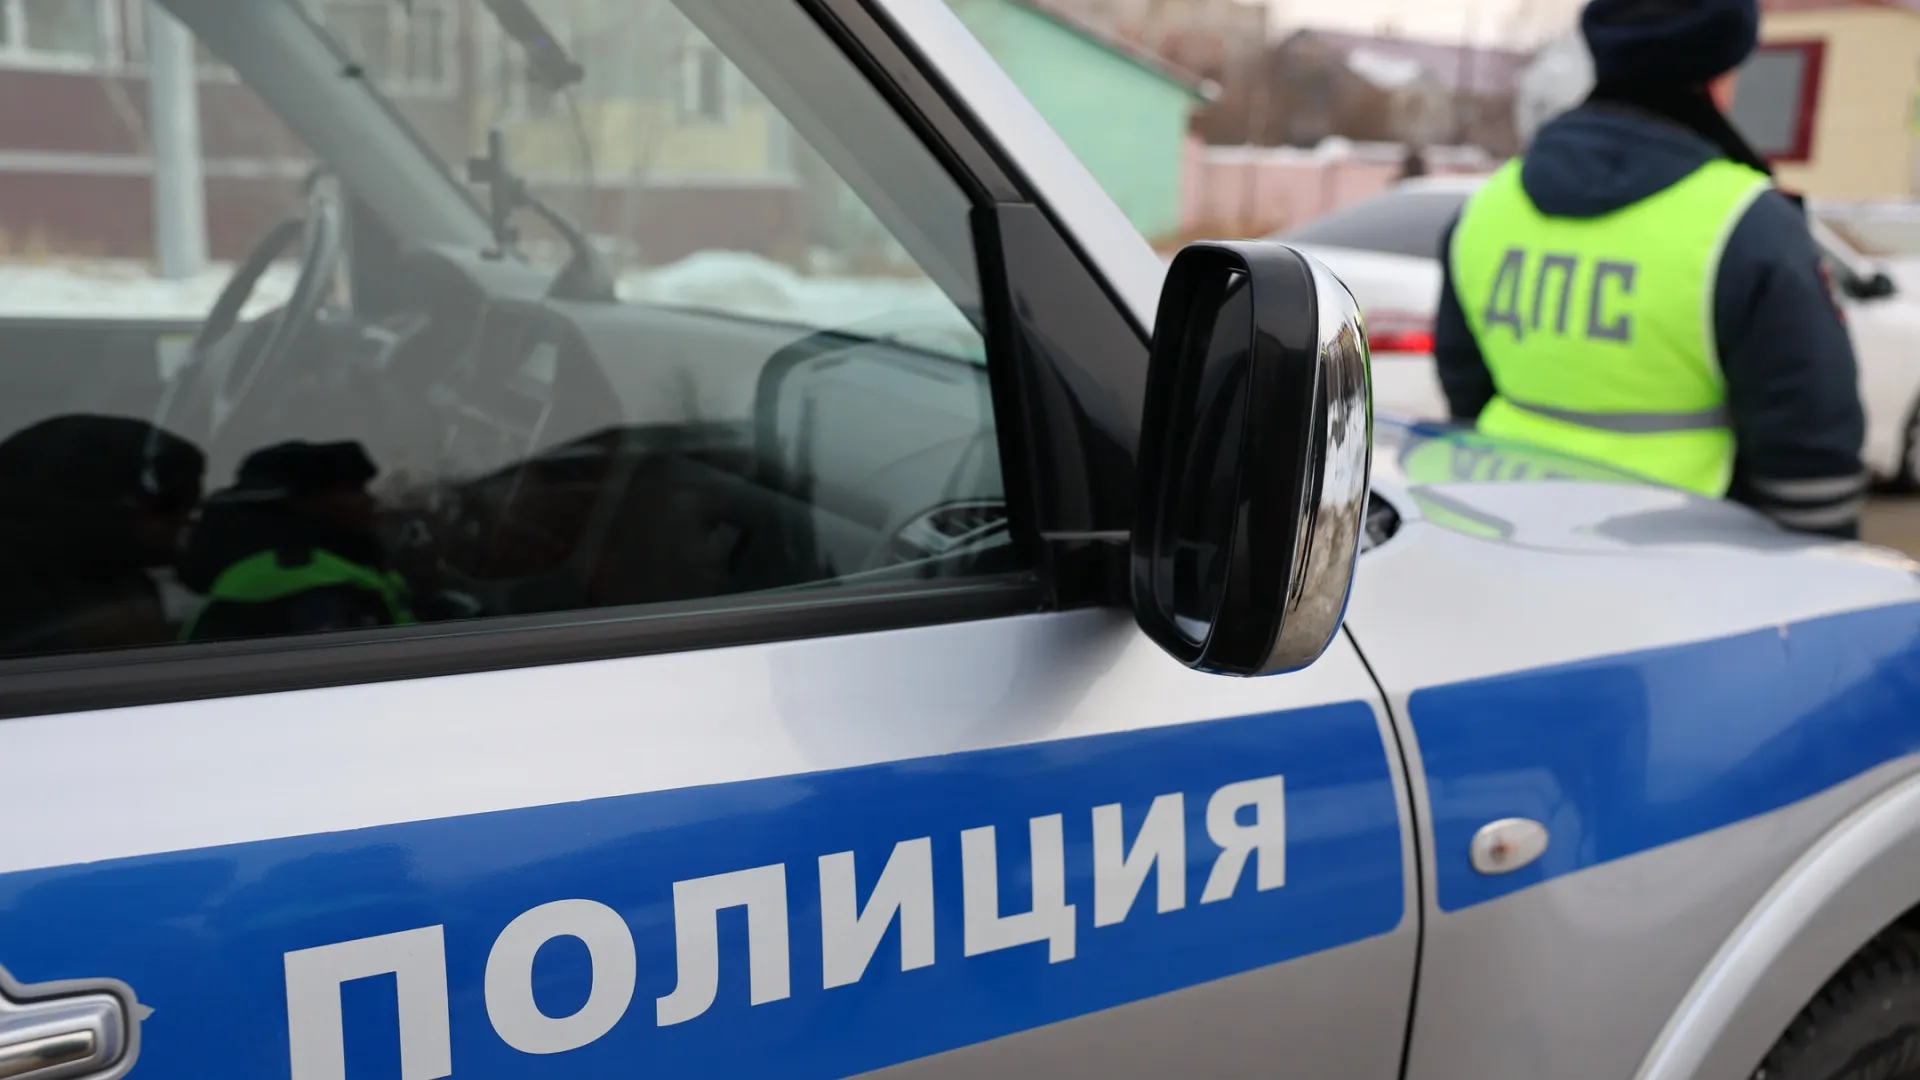 Полиция нашла нарушителя по камерам видеонаблюдения. Фото: Андрей Ткачев / «Ямал-Медиа»